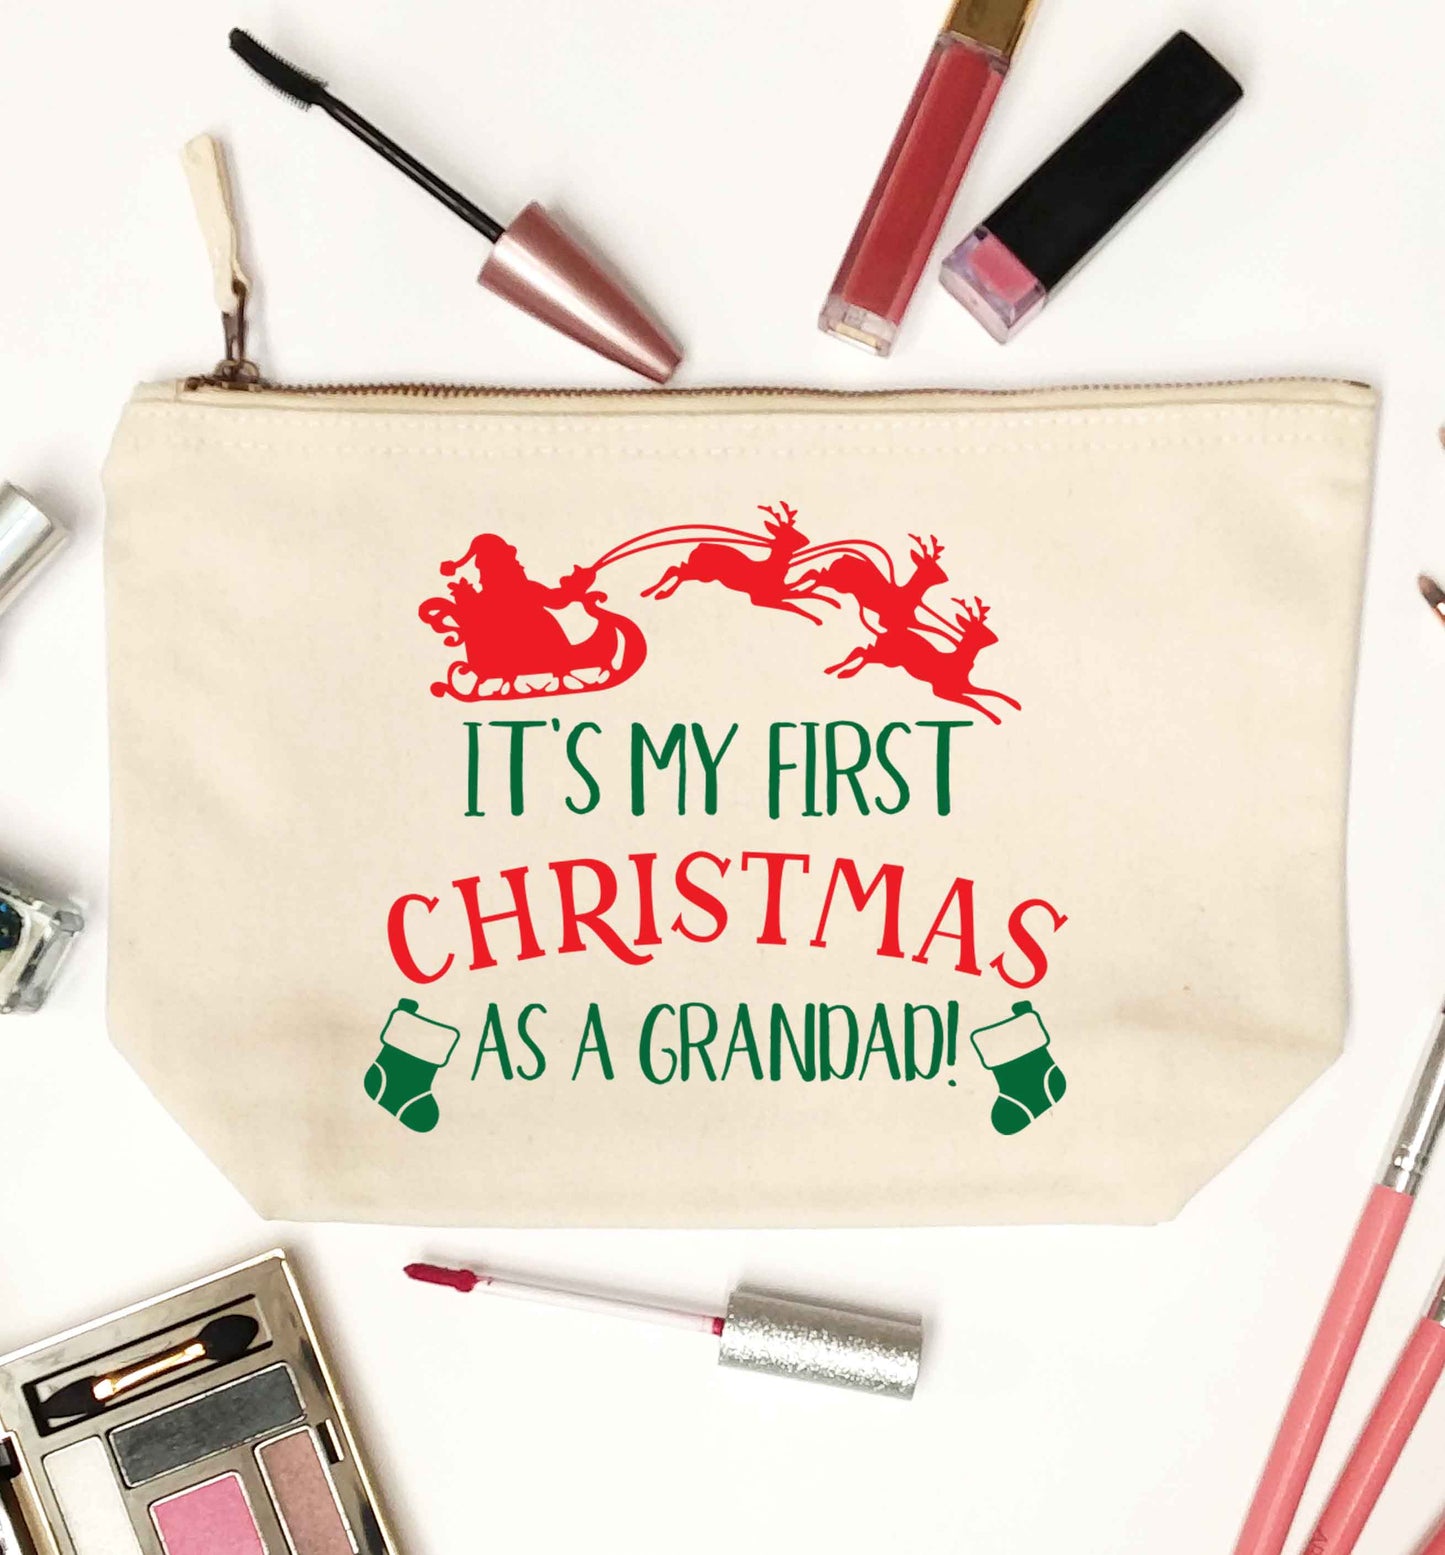 It's my first Christmas as a grandad! natural makeup bag